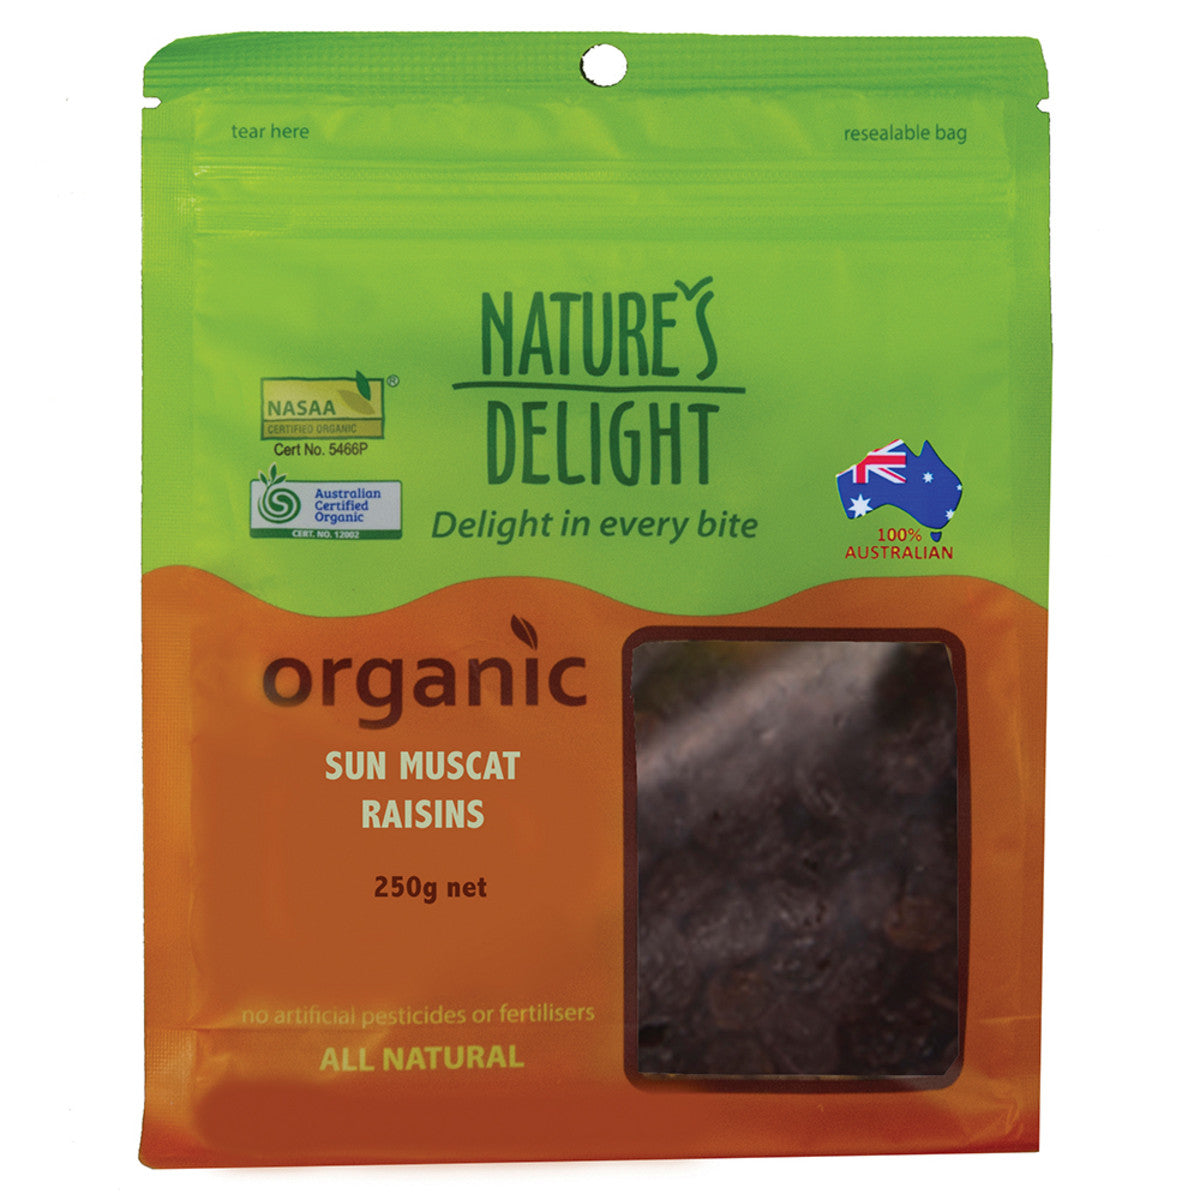 Natures Delight - Organic Sun Muscat Raisins